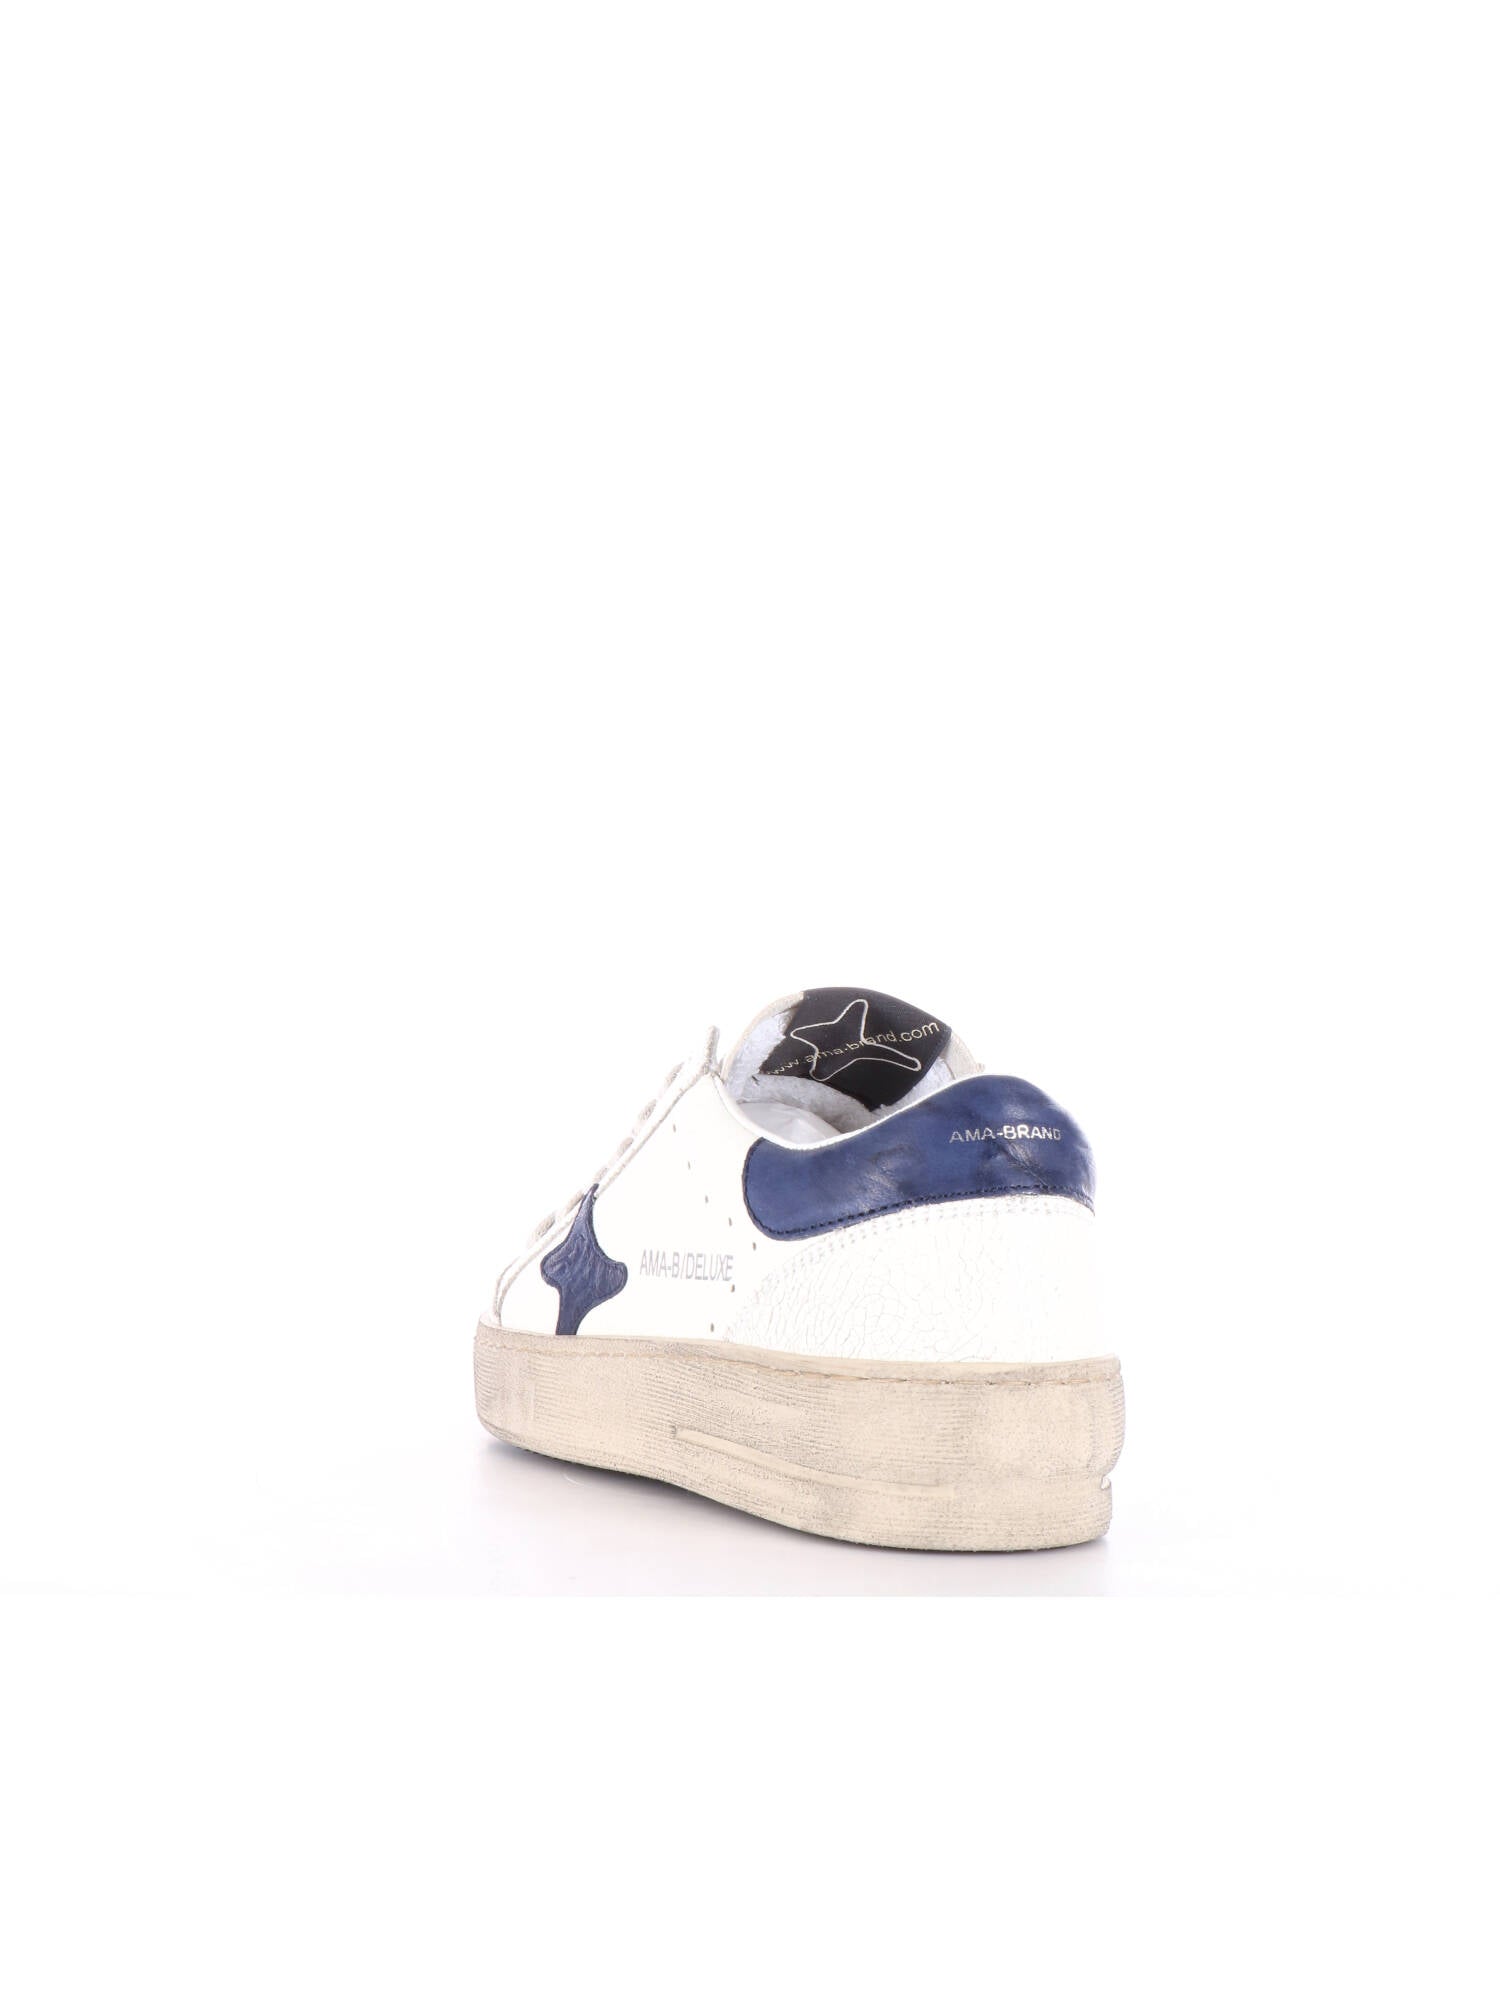 Ama-brand Sneakers uomo Slam bianco/blu